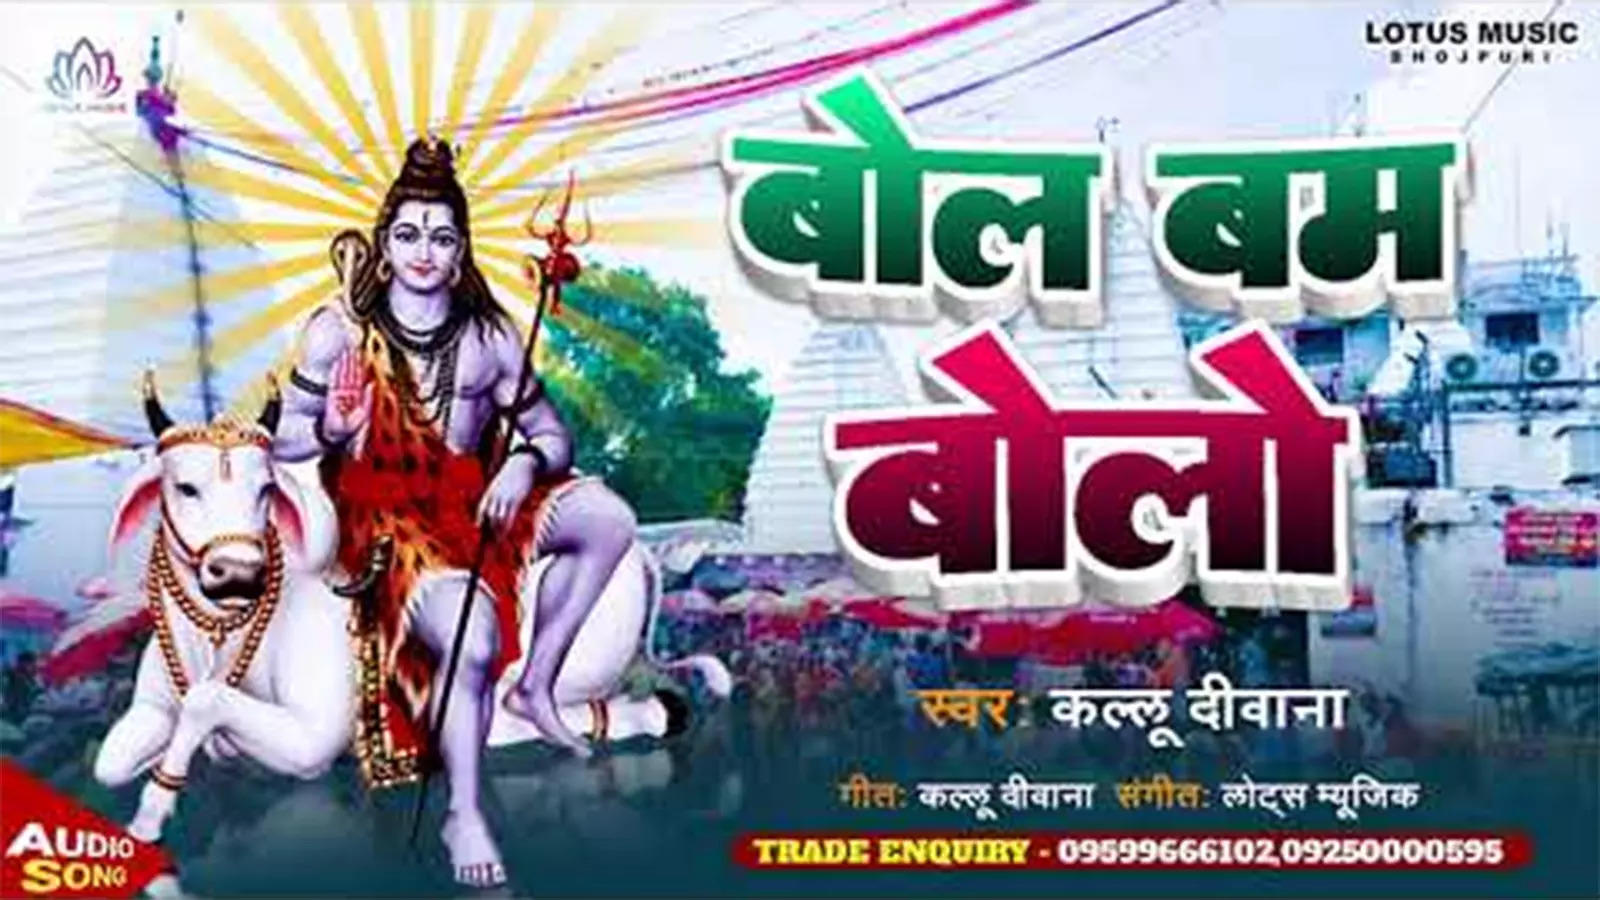 Listen To Latest Bhojpuri Devotional Song 'Bol Bam Bolo' Sung By Kallu  Diwana | Lifestyle - Times of India Videos